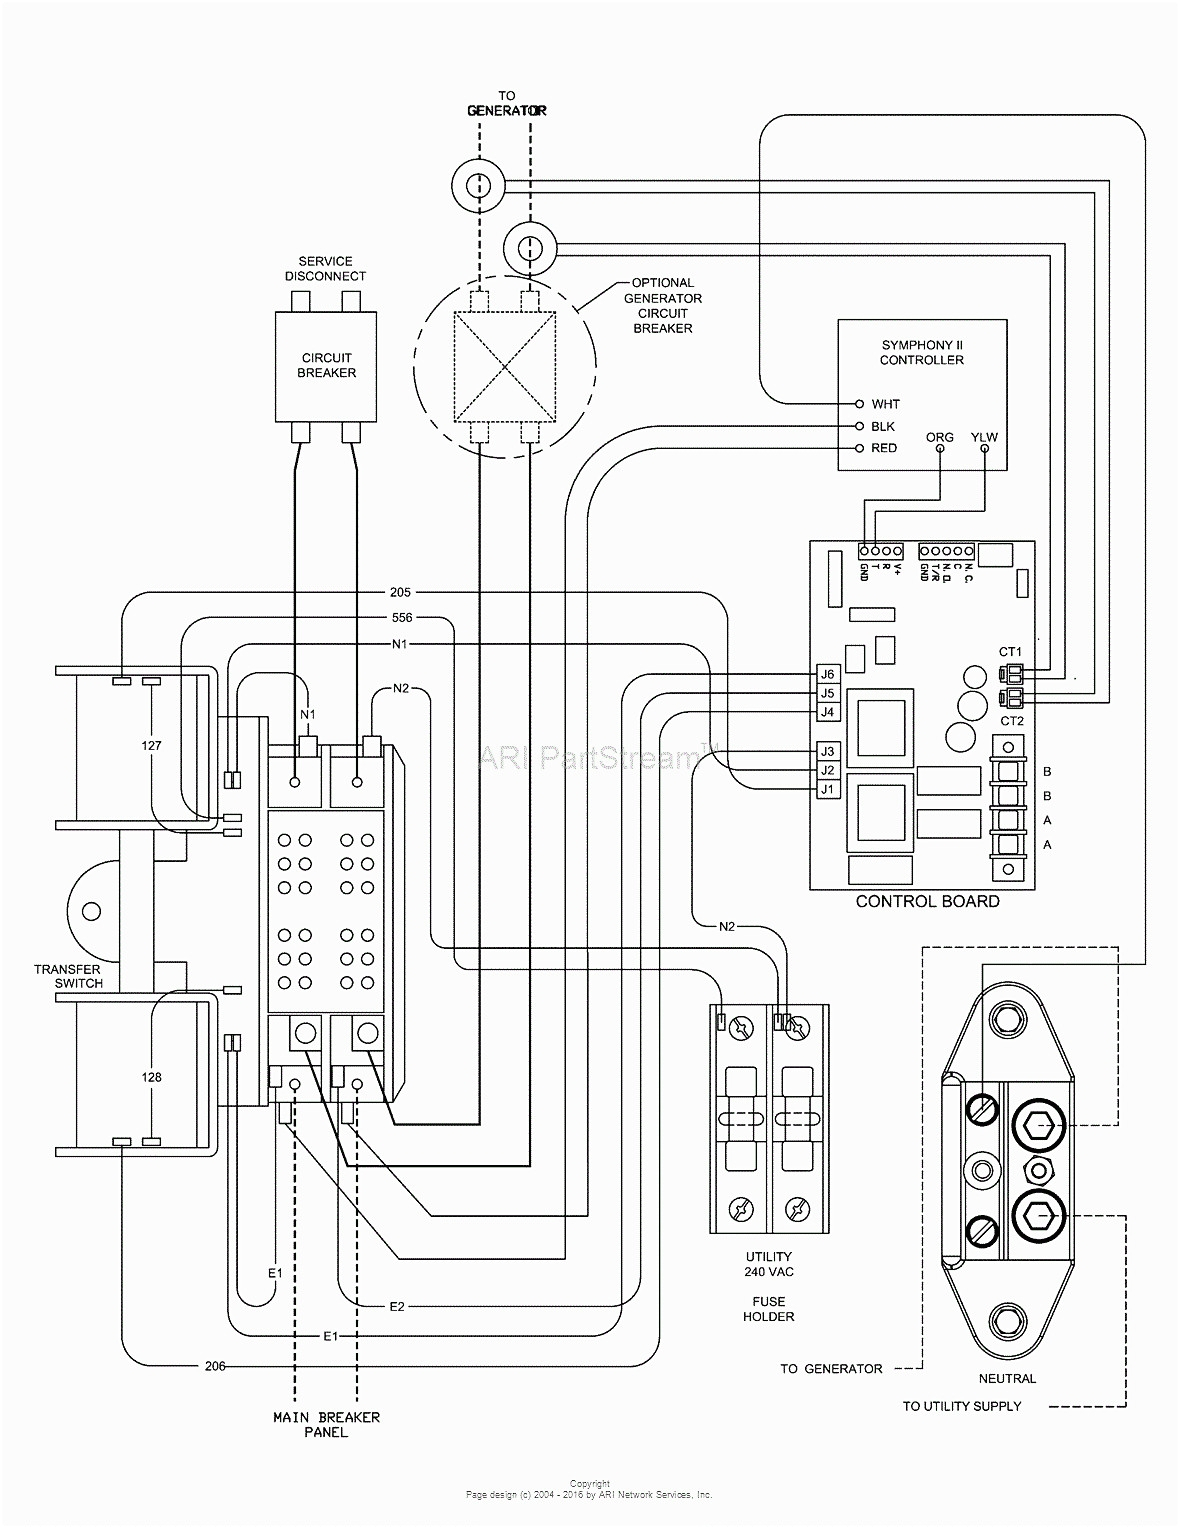 Generac Standby Generator Wiring Diagram Generac ats Wiring Diagram Wiring Diagram